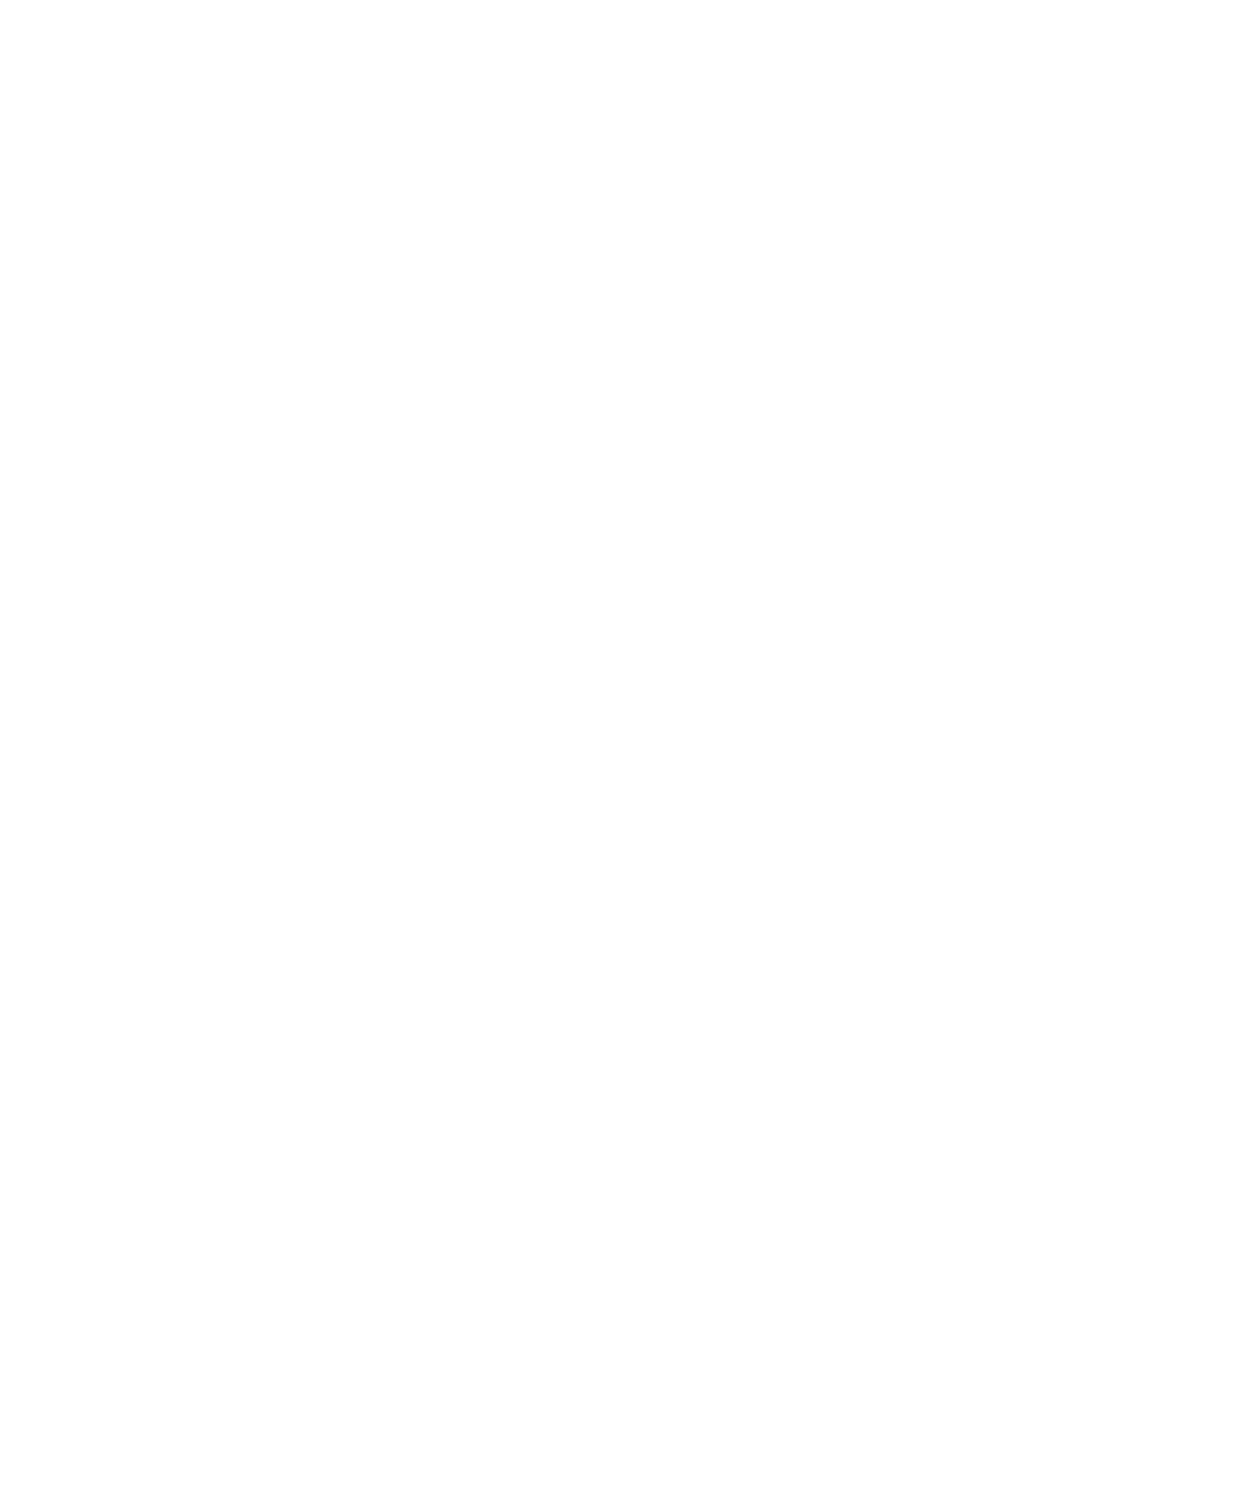 Guerrilla logo company